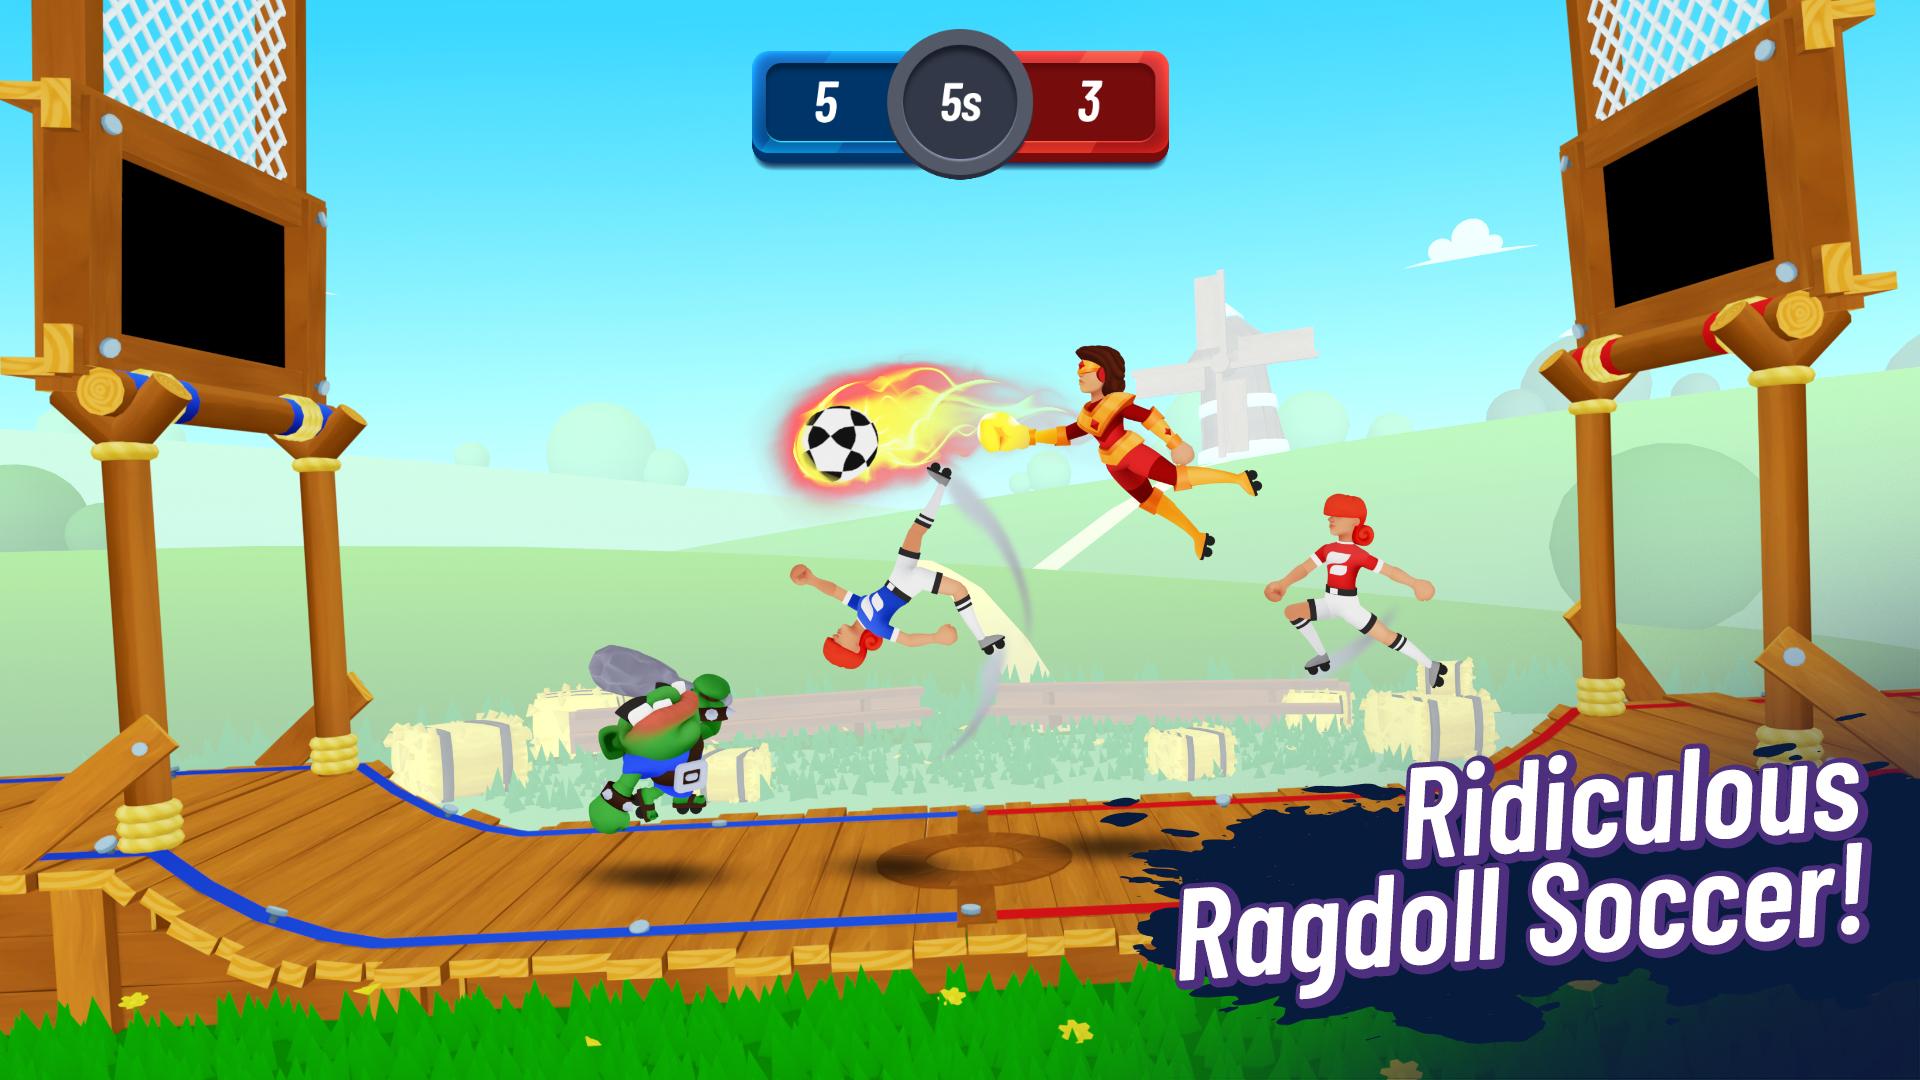 Ballmasters Ridiculous Ragdoll Soccer 0.6.0 Screenshot 7